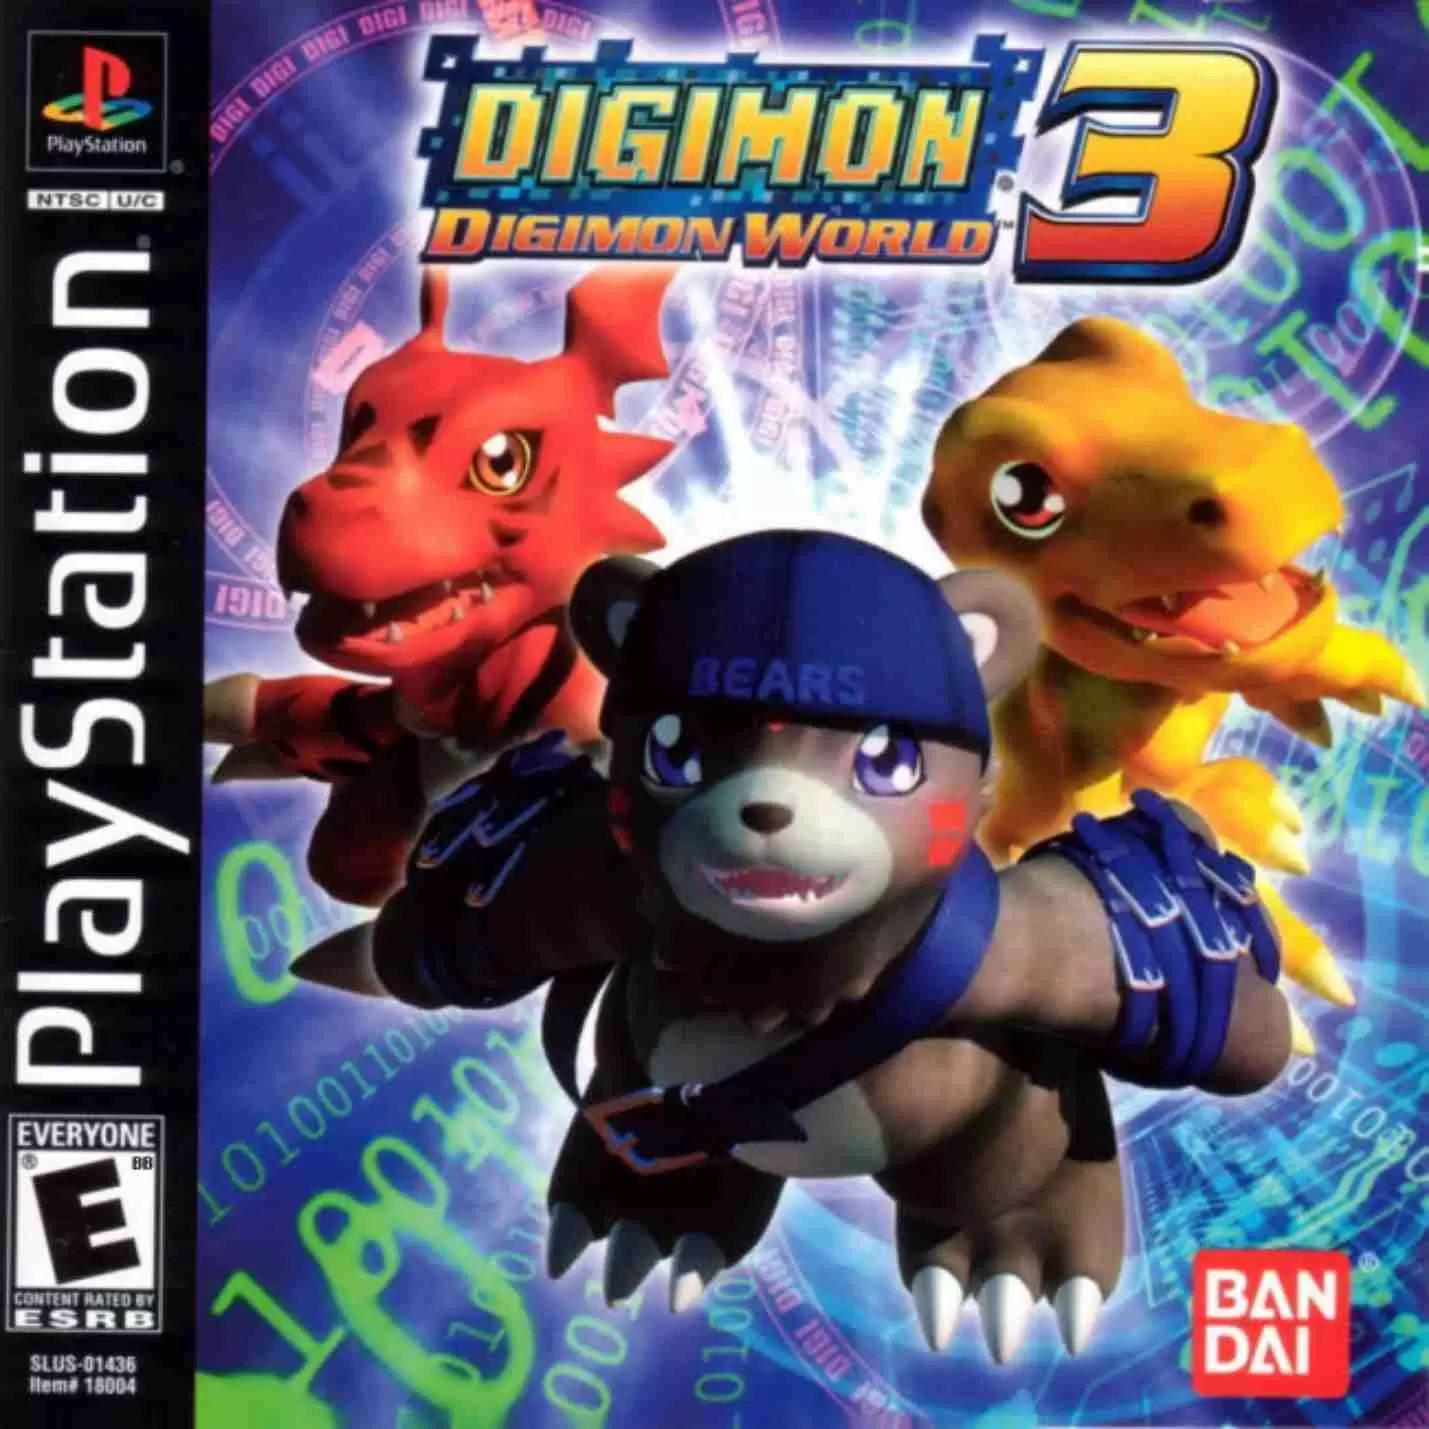 Playstation games - Digimon World 3